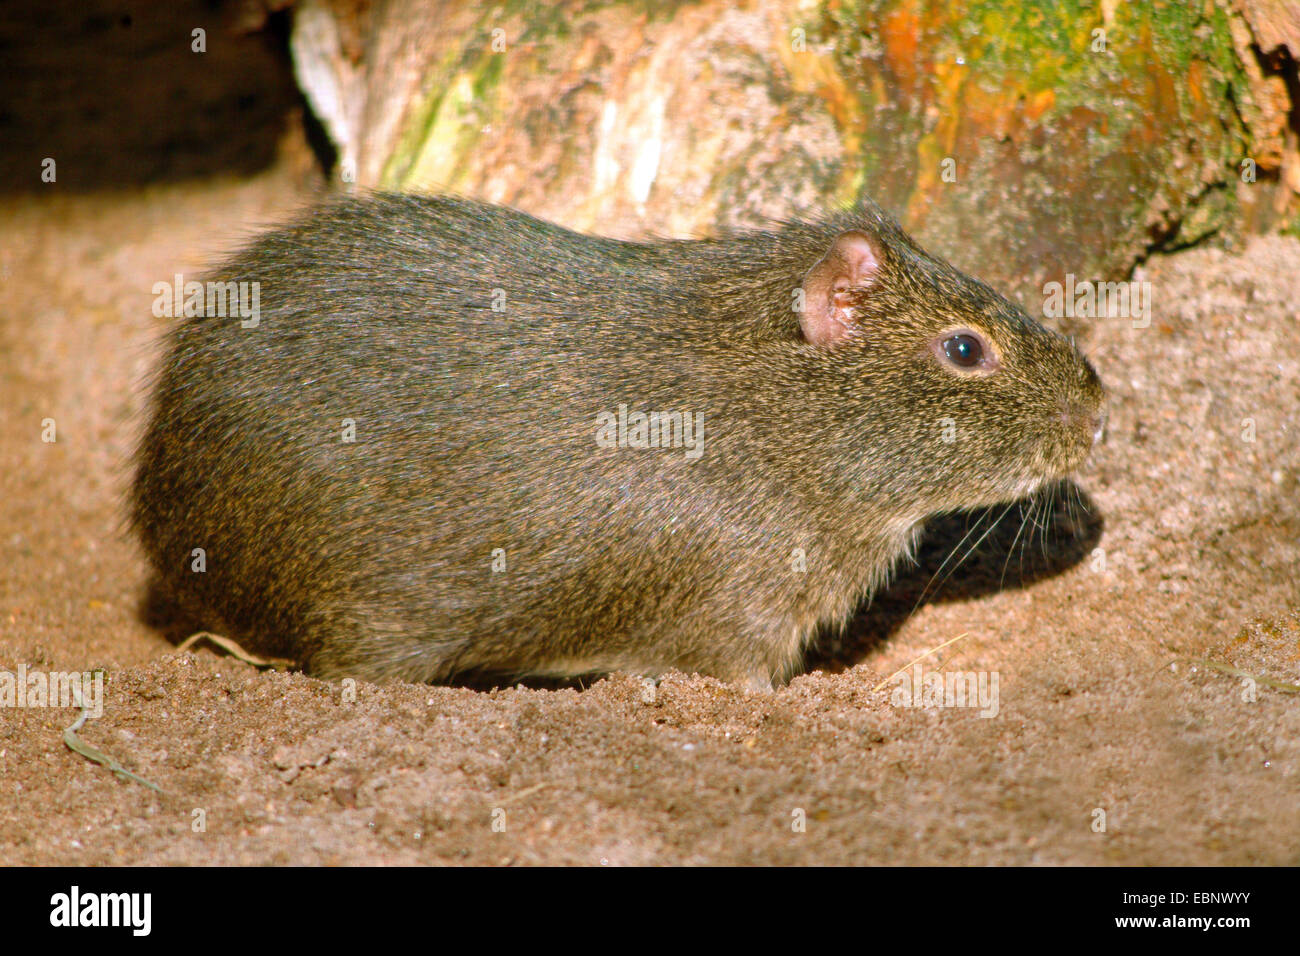 Cavy, Brazilian Guinea pig (Cavia aperea), on sandy ground Stock Photo